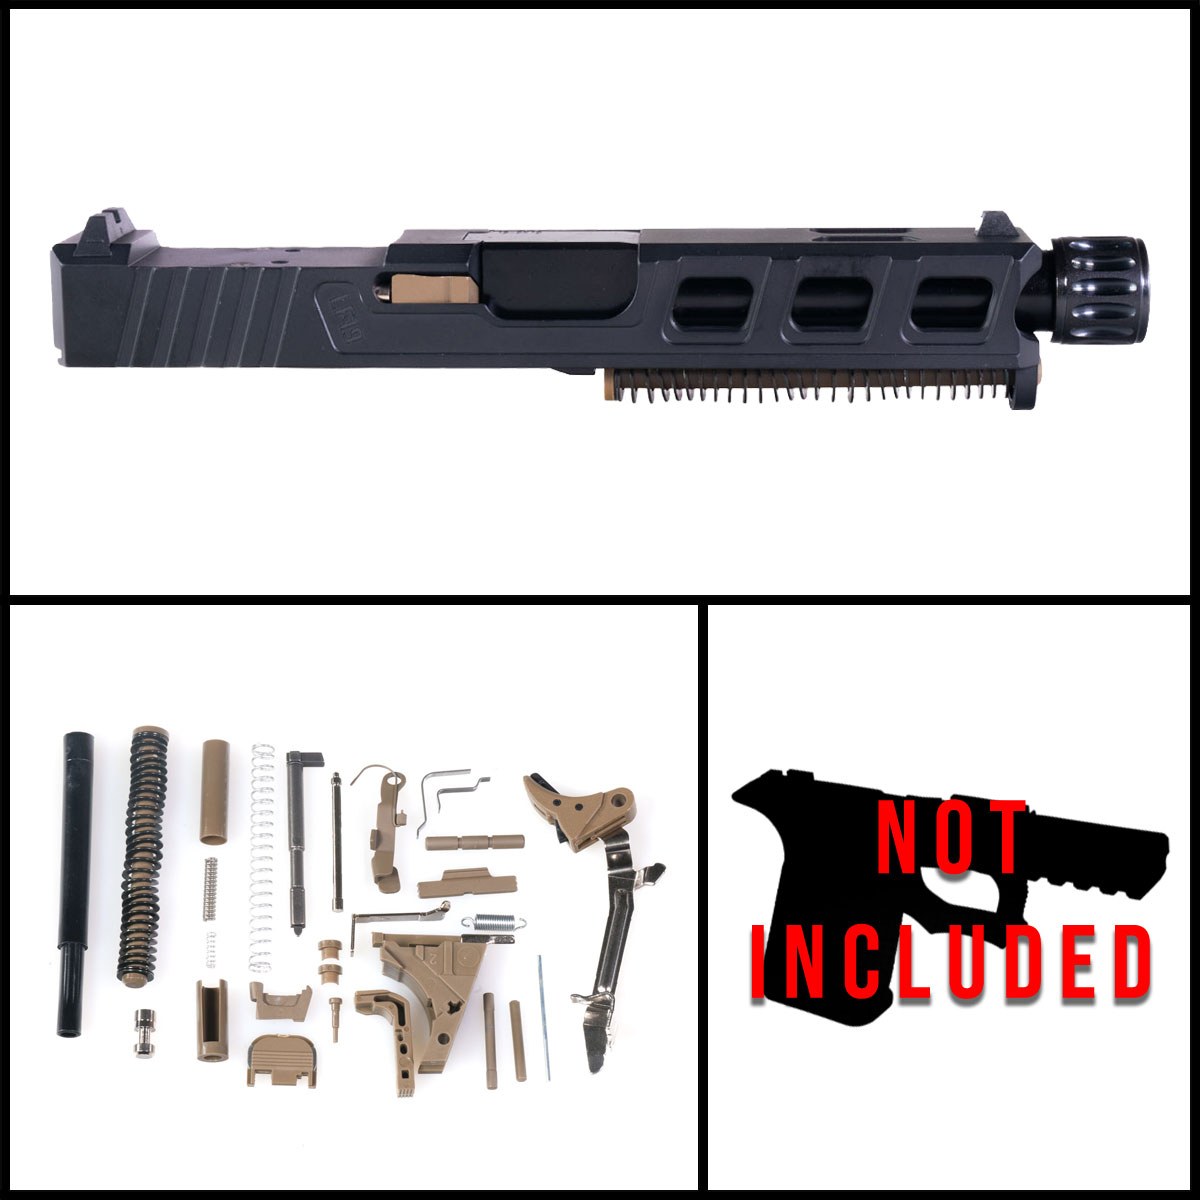 DDS 'Mud Flap' 9mm Full Pistol Build Kit (Everything Minus Frame) - Glock 19 Gen 1-3 Compatible